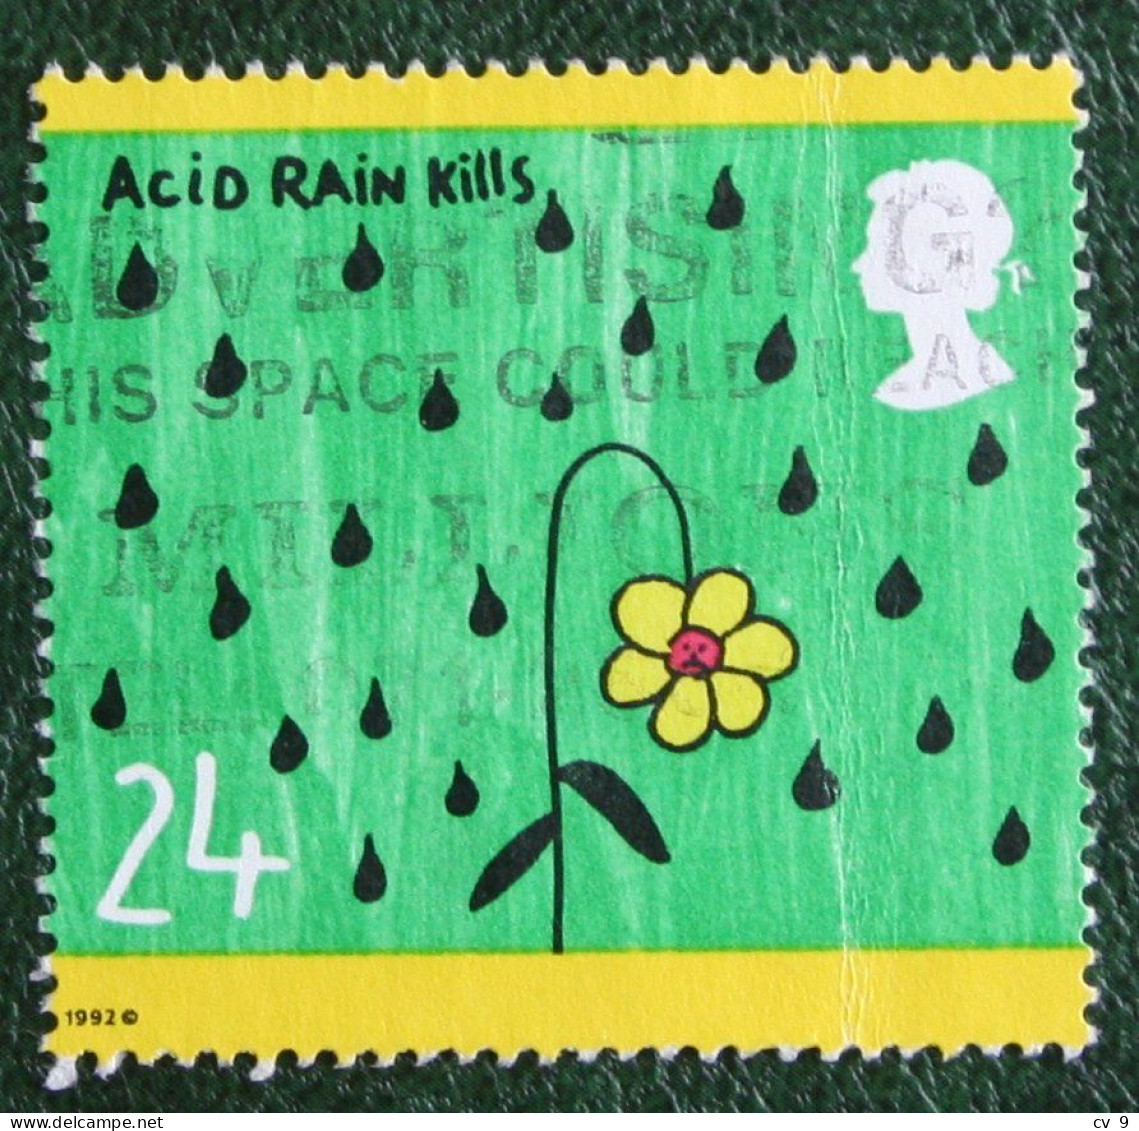 Acid Rains Kills Children Mi 1414 Yv 1633 SG 1629 1992 Used/gebruikt/oblitere ENGLAND GRANDE-BRETAGNE GB GREAT BRITAIN - Used Stamps